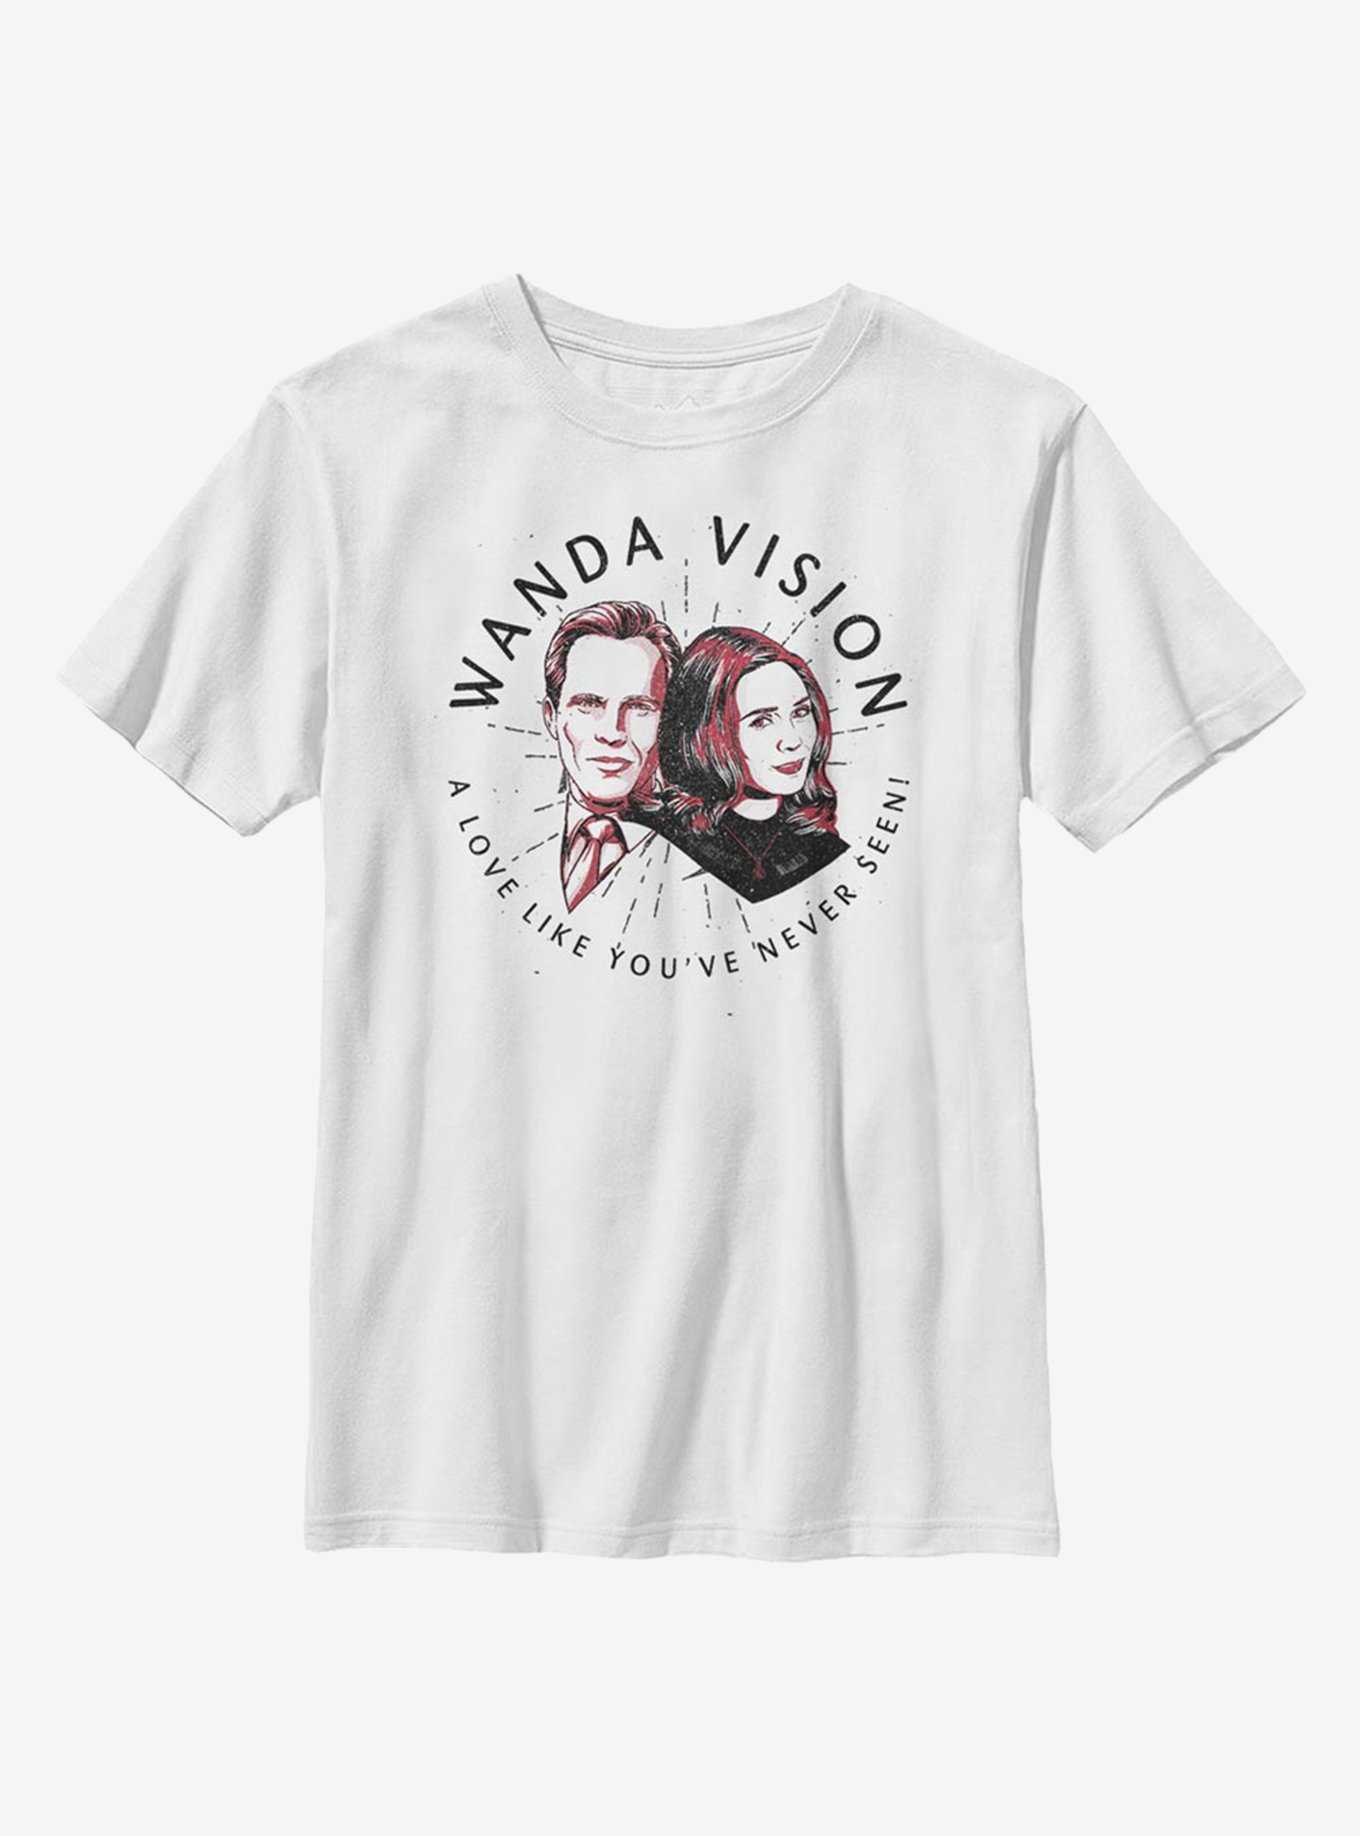 Marvel WandaVision Wanda Badge Youth T-Shirt, , hi-res